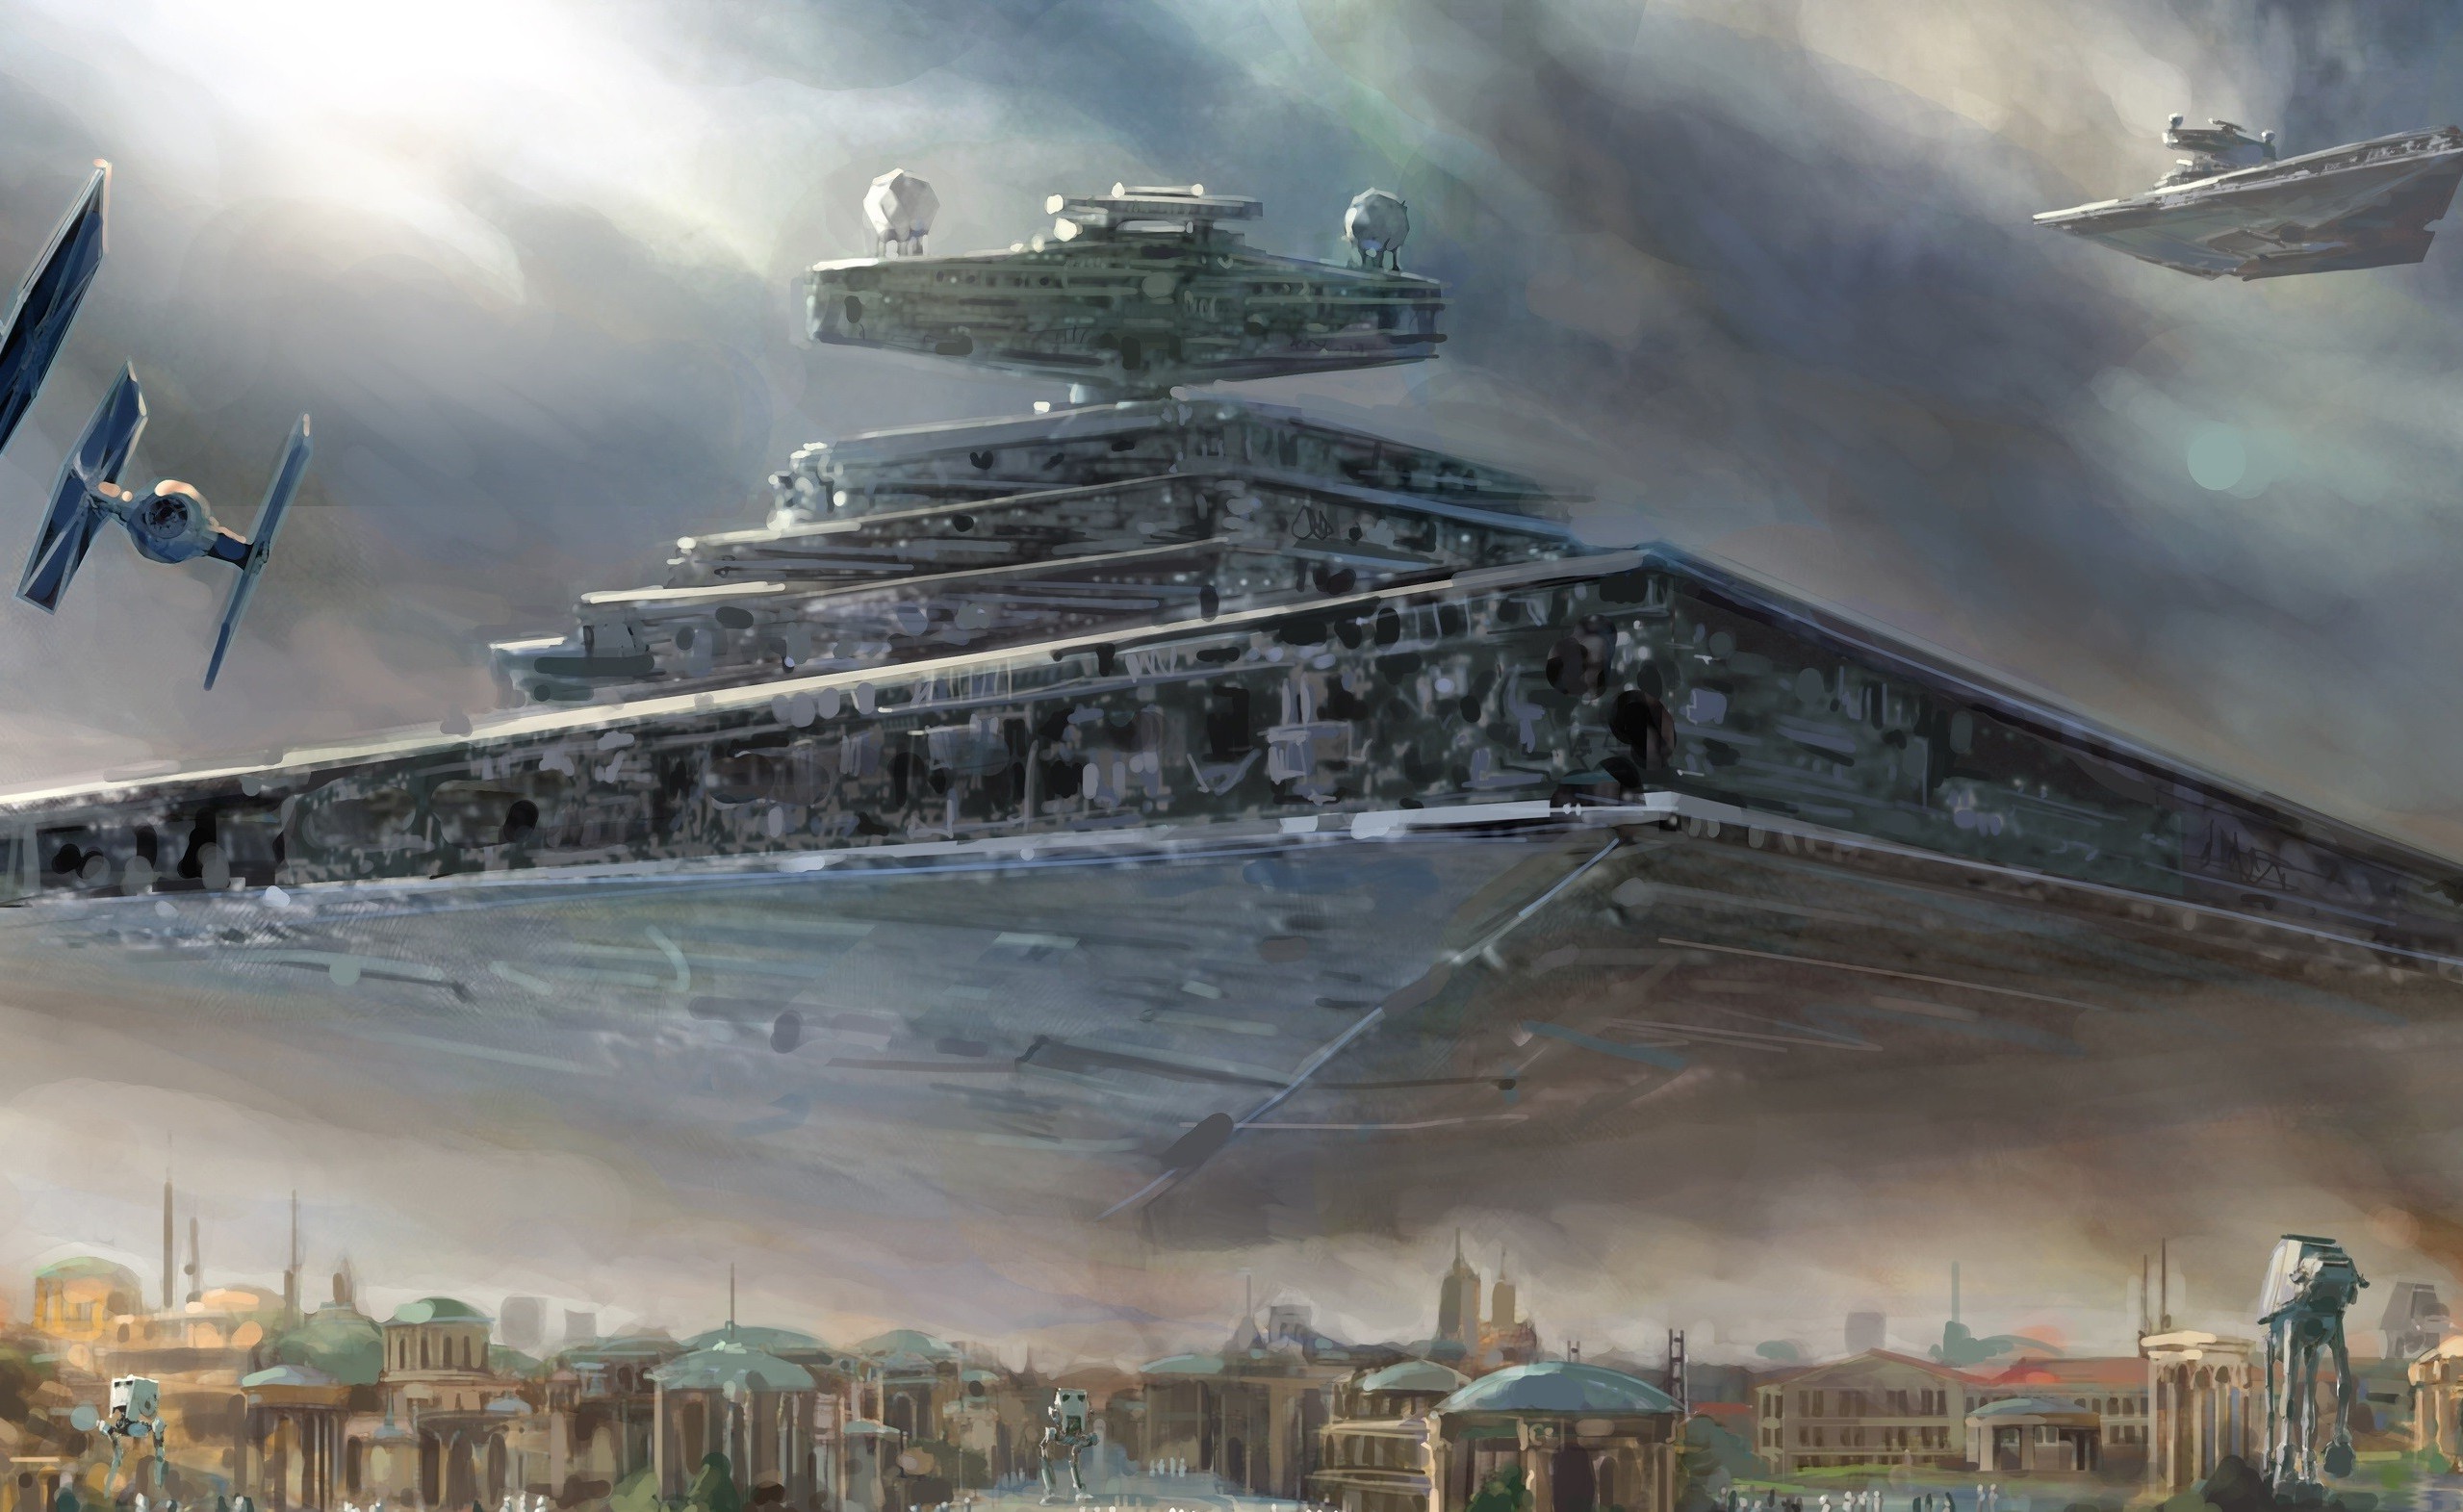 Wallpaper, drawing, Star Wars, vehicle, Battleship, stadium, ghost ship, screenshot, 2559x1571 px 2559x1571